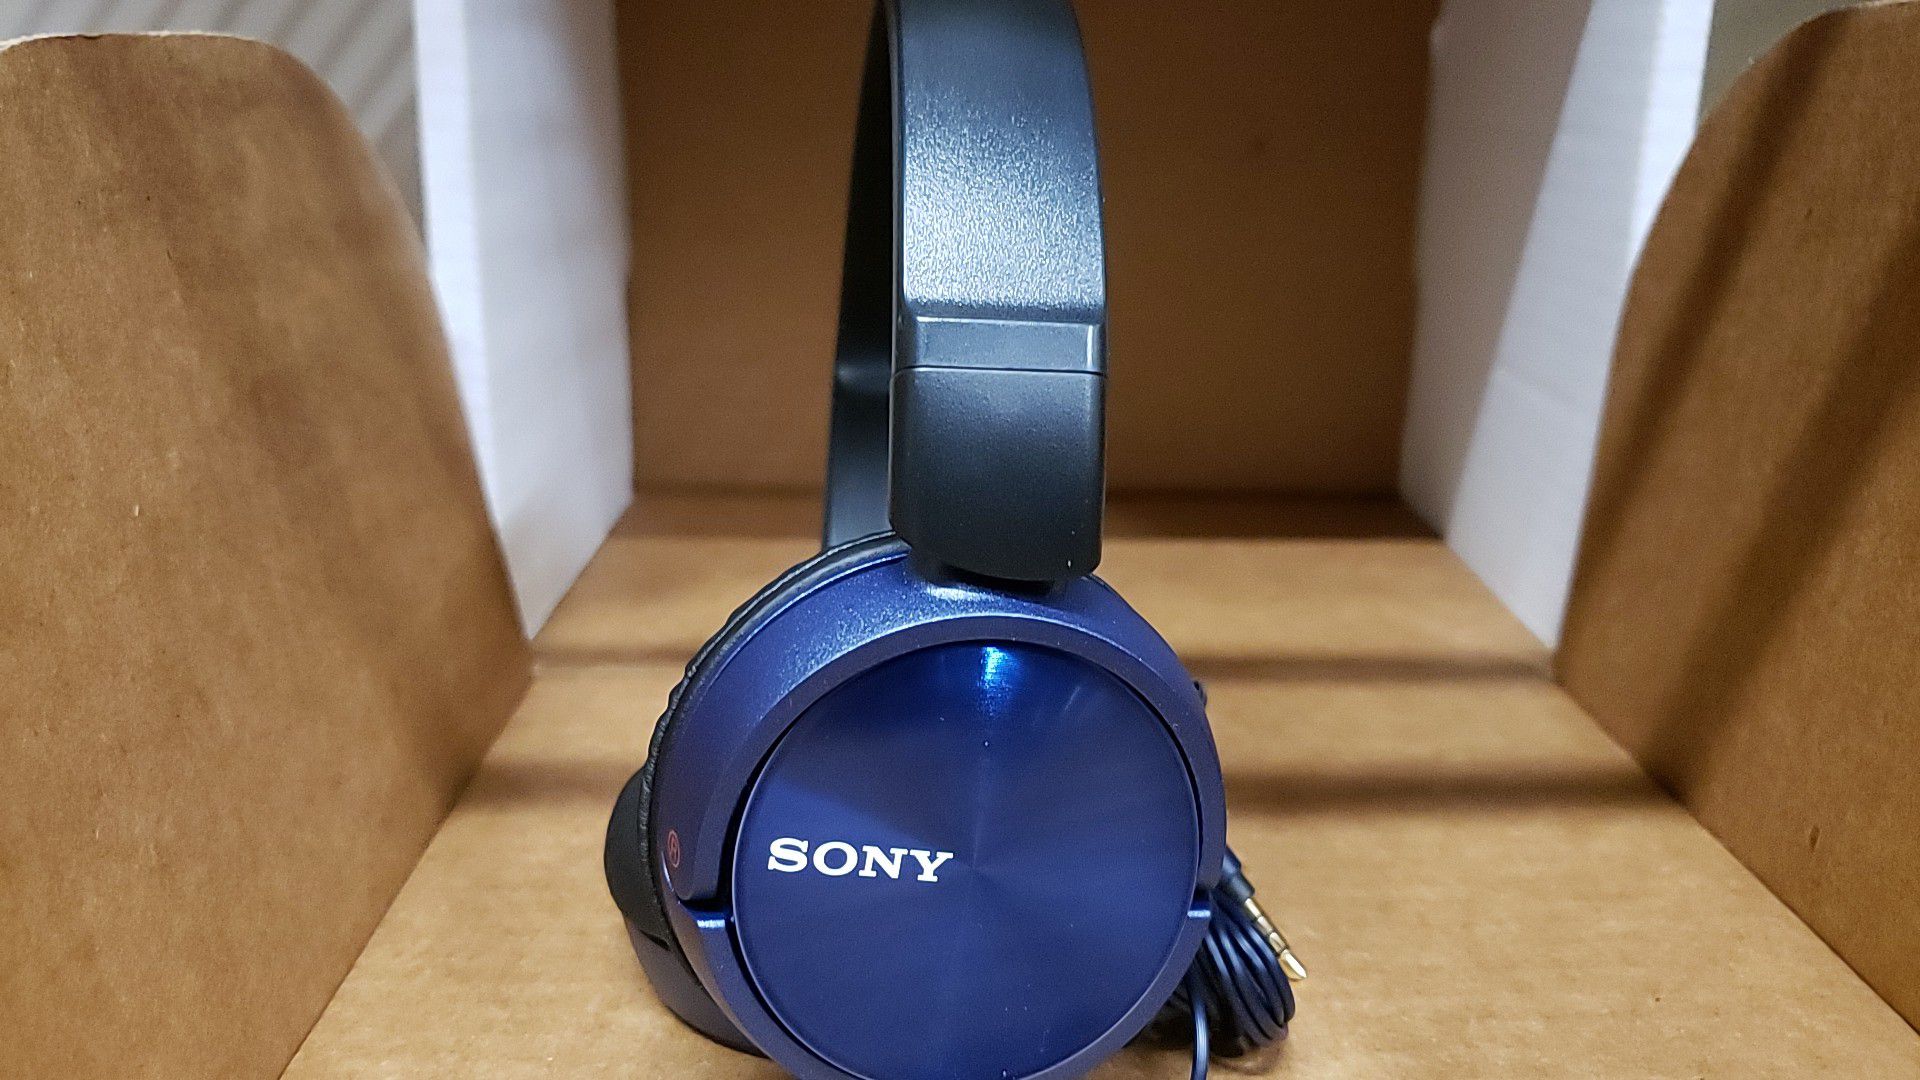 Sony mdrzx310ap. Wired on ear headphones